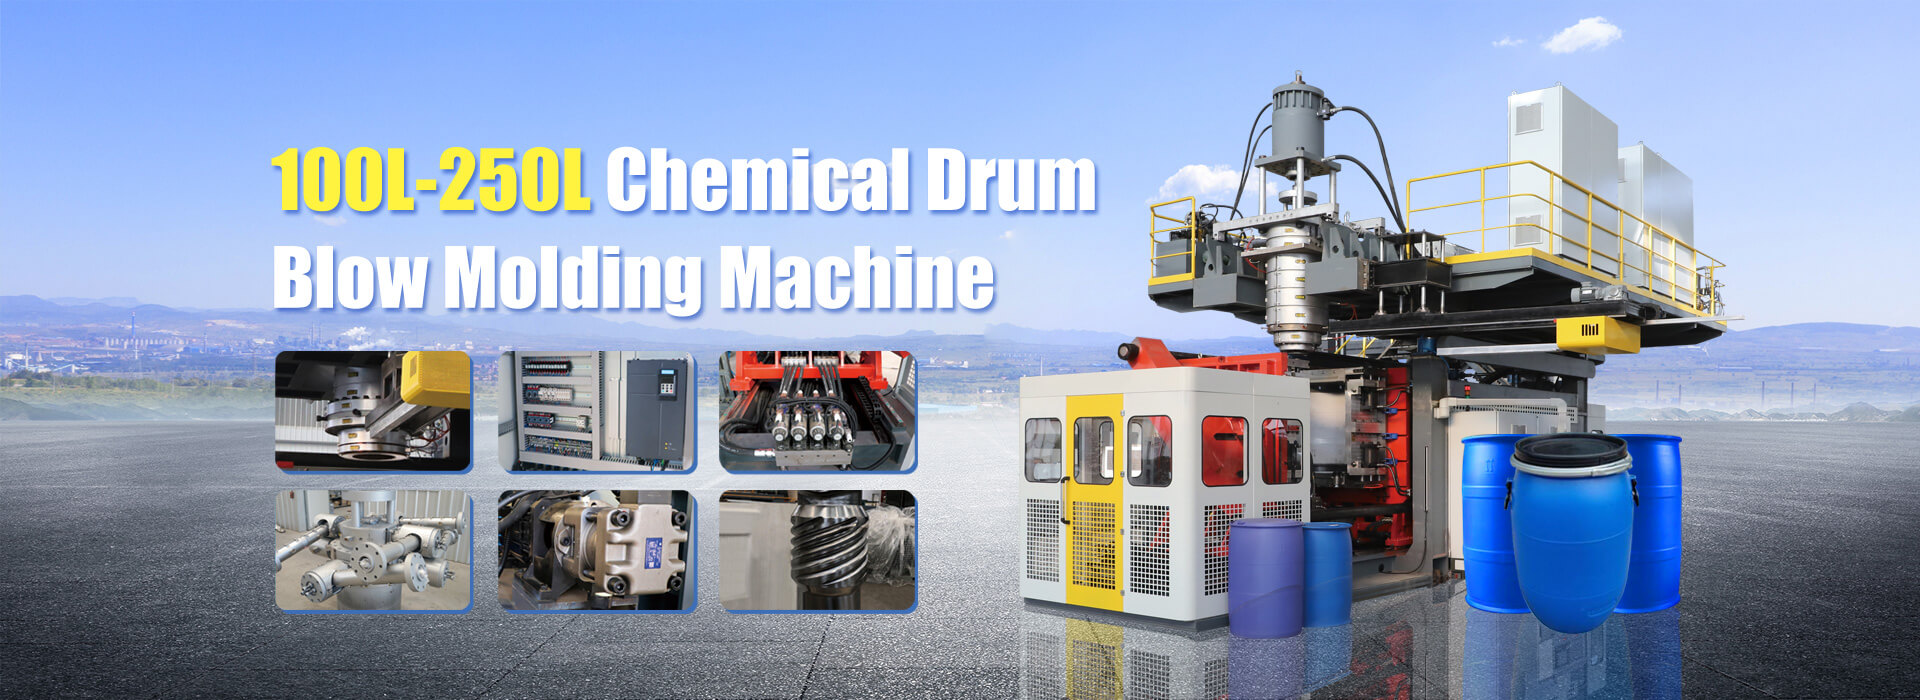 Chemical Drum Blow Molding Machine